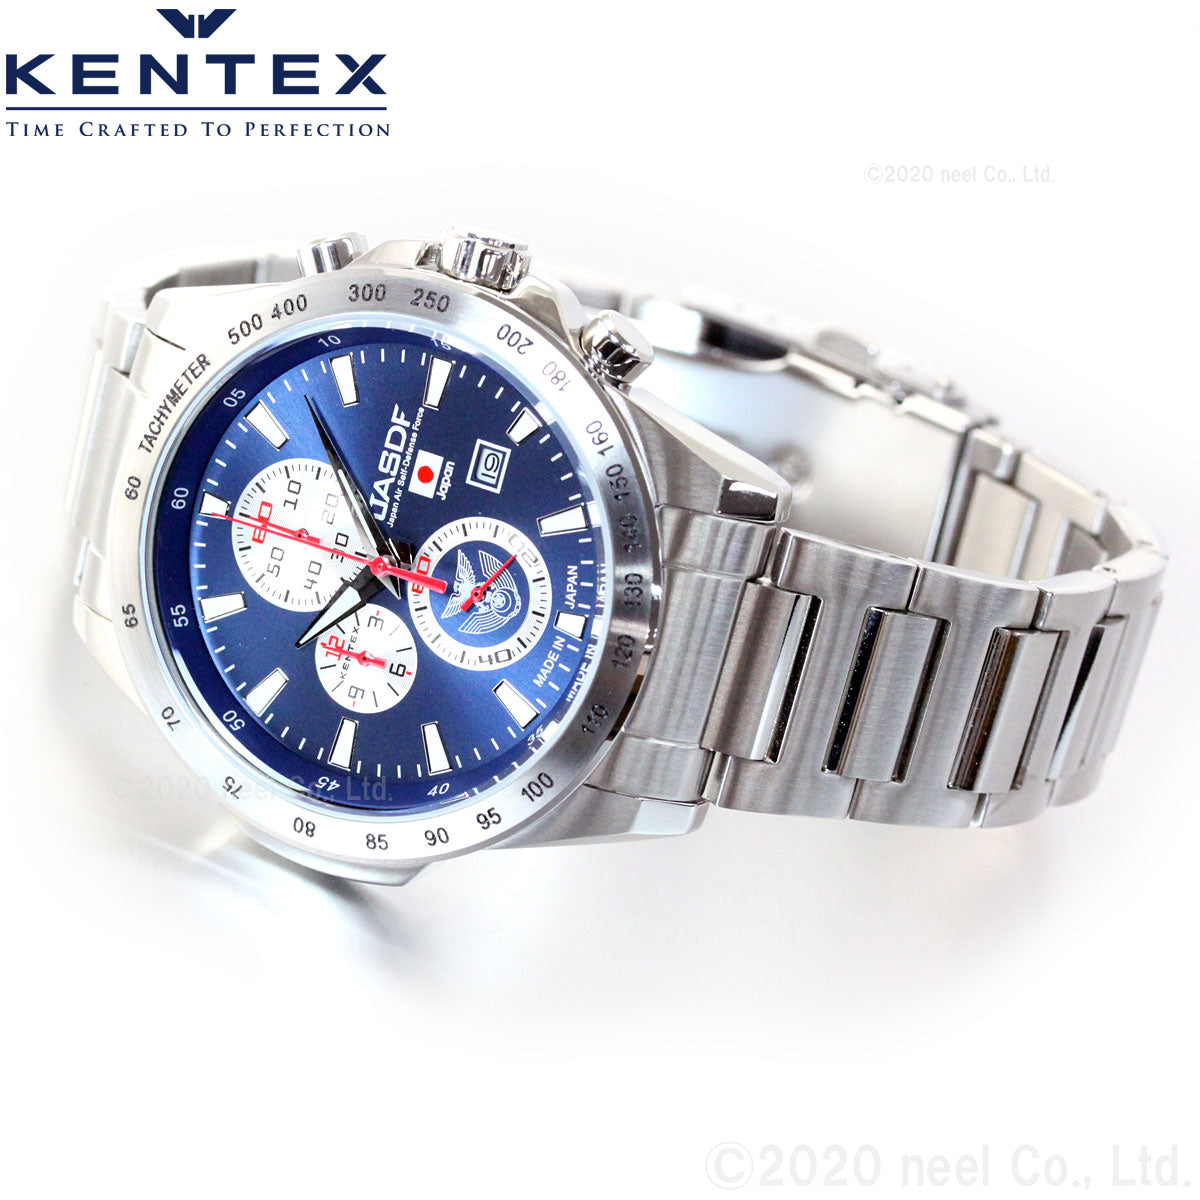 KENTEX ケンテックス 腕時計 メンズ JASDF PRO 自衛隊モデル 航空自衛隊 クロノグラフ S648M-01【正規品】【送料無料】